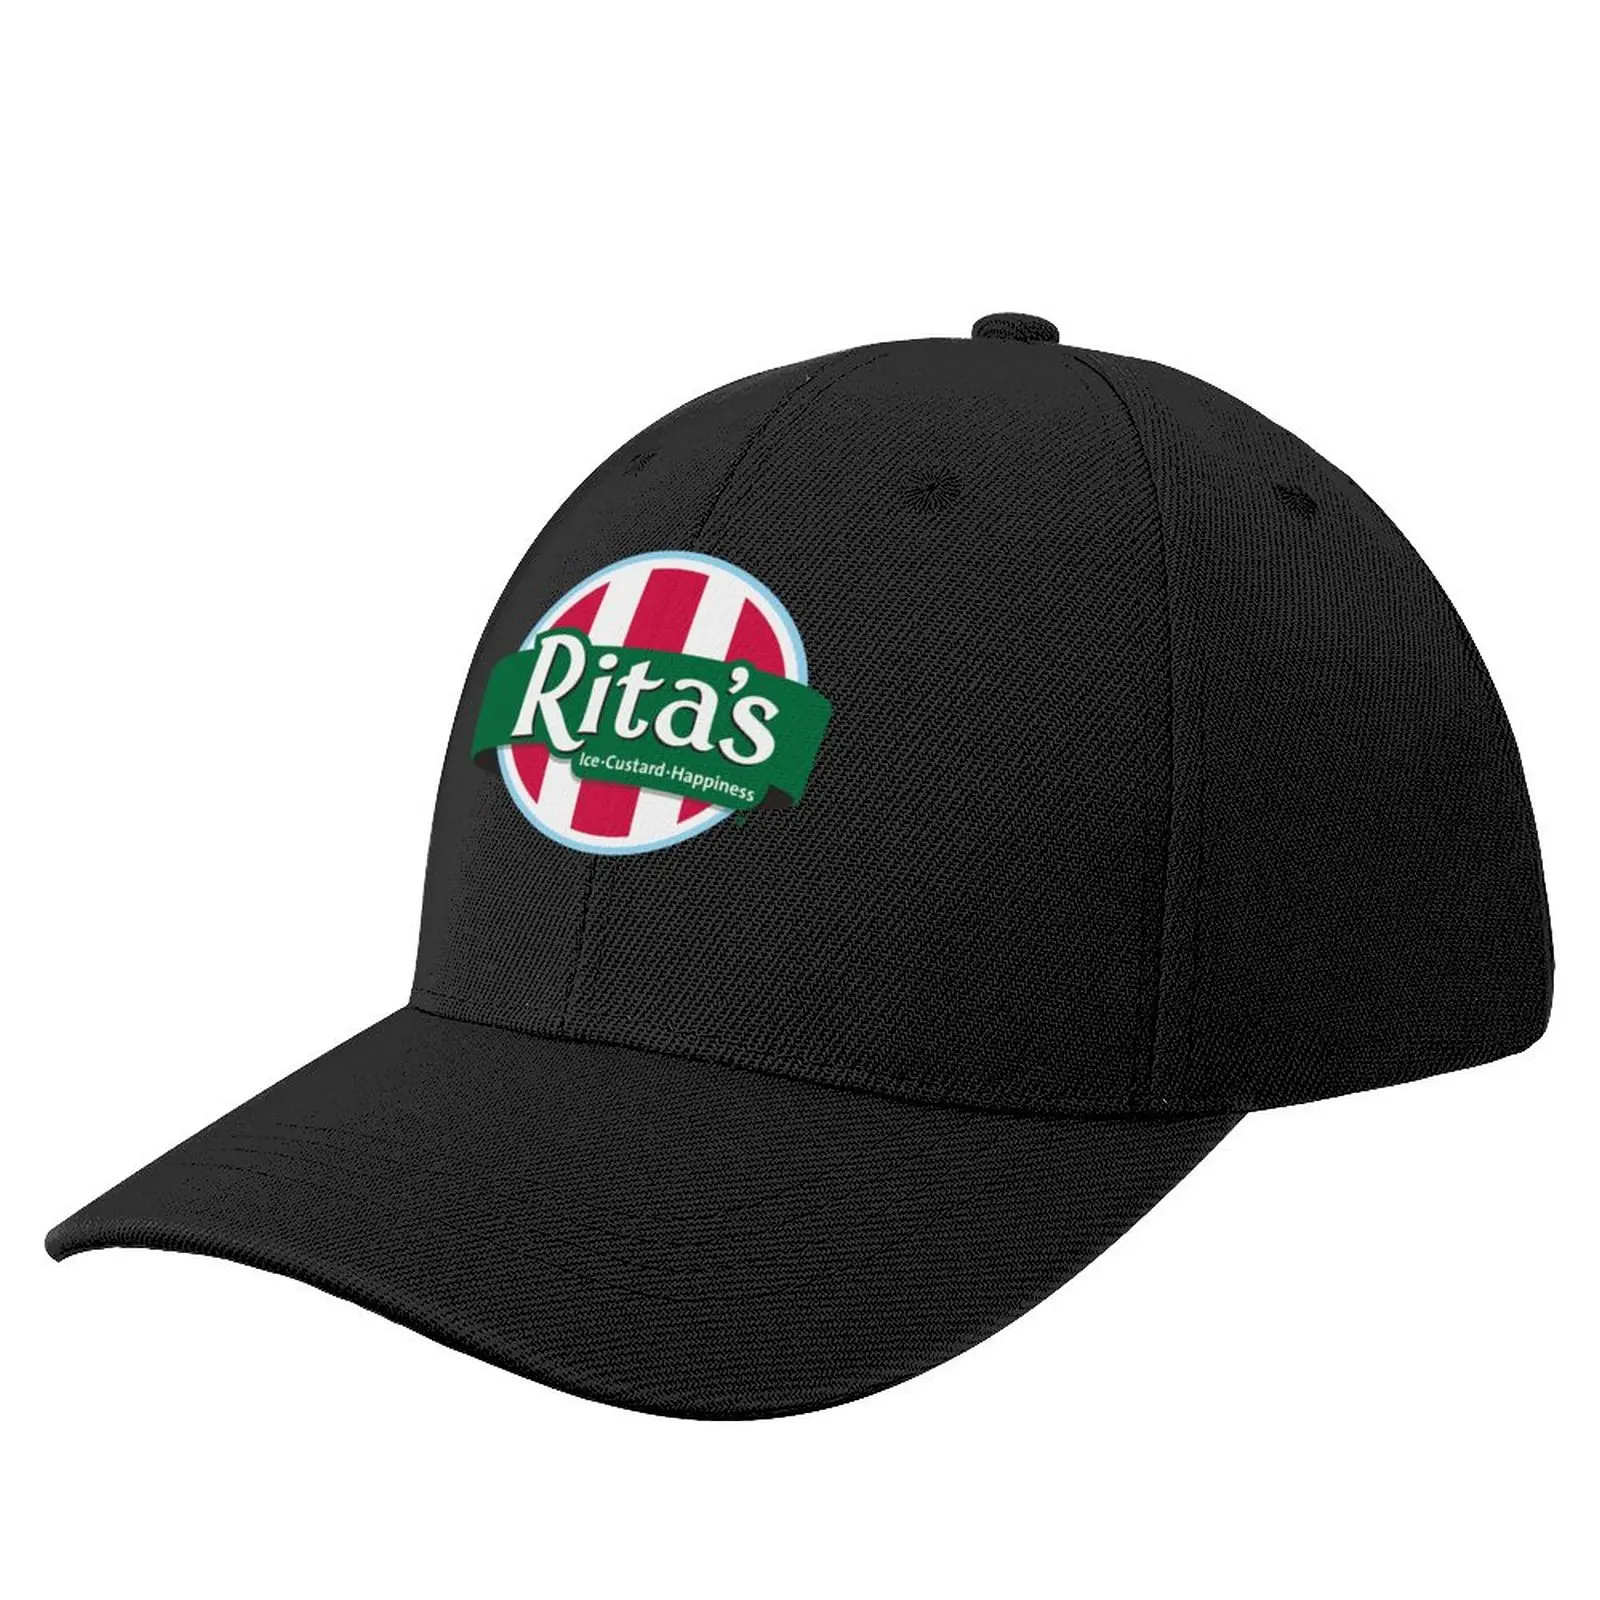 

Rita's italian ice cafe classic t shirt Baseball Cap Fishing Caps Sunhat sun hat Hat For Women Men'S